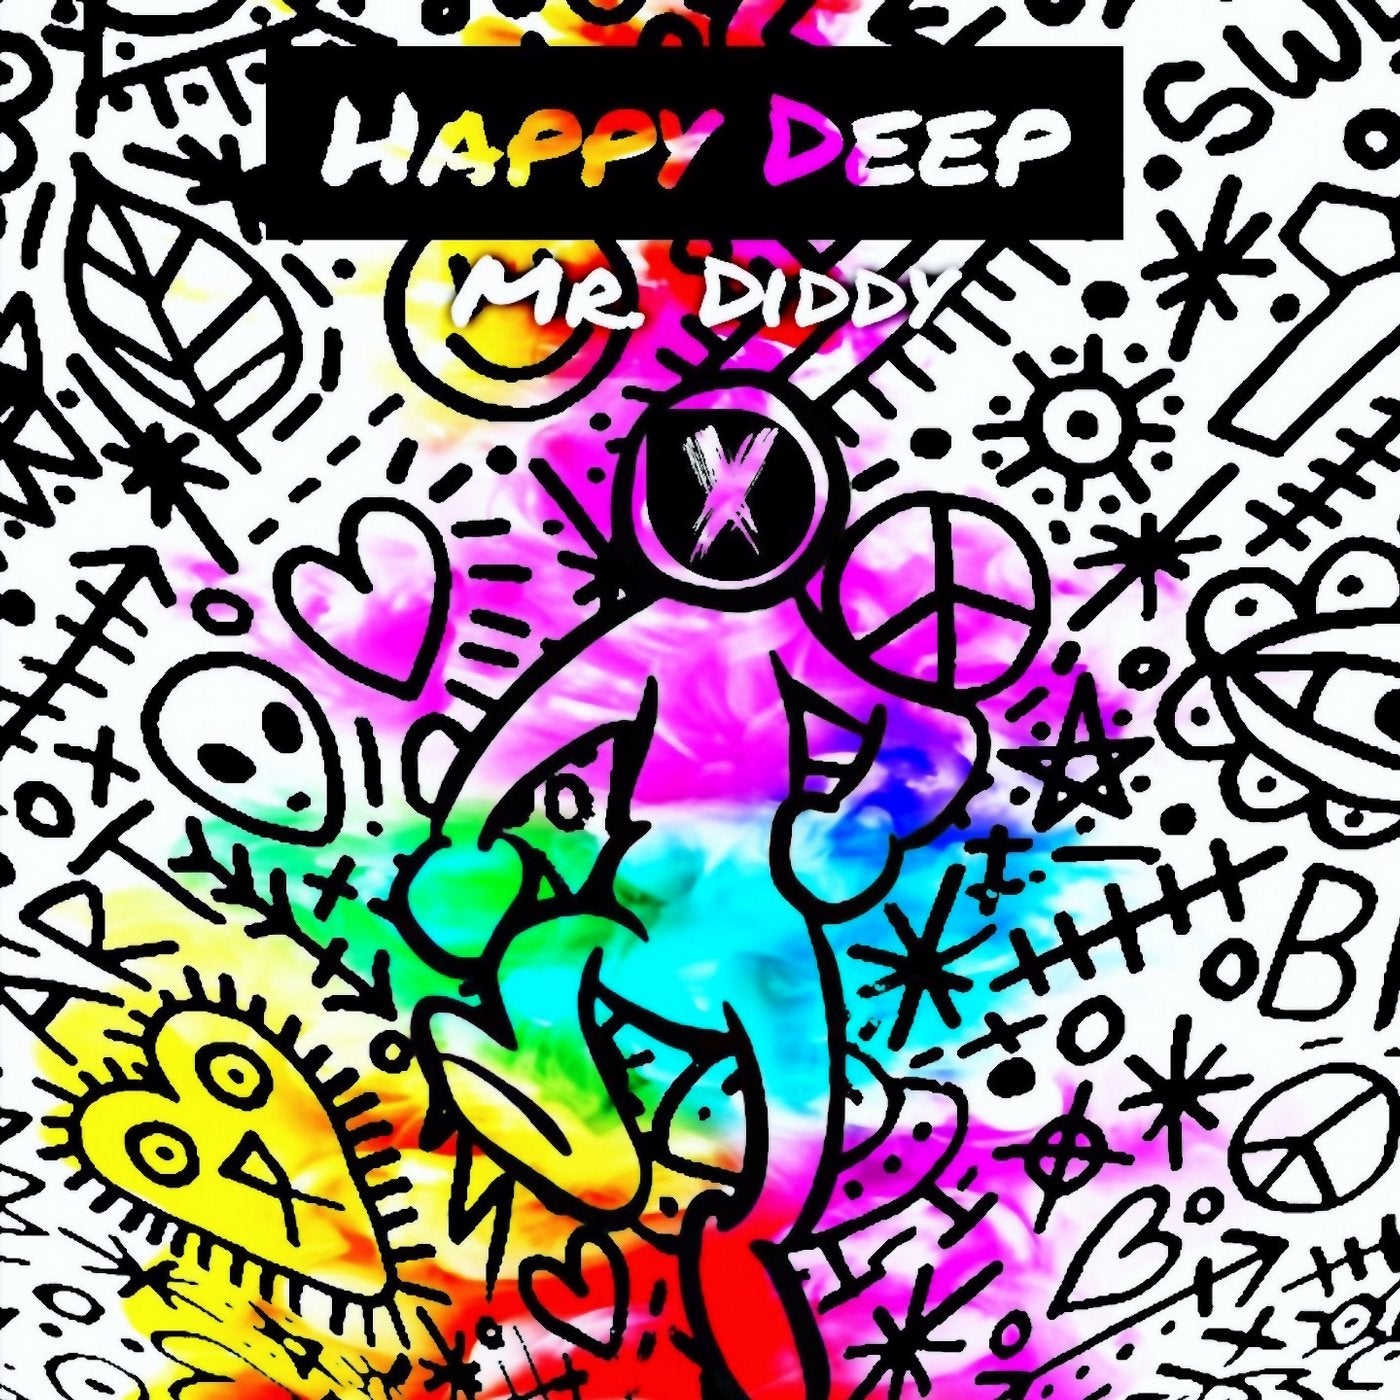 Happy Deep